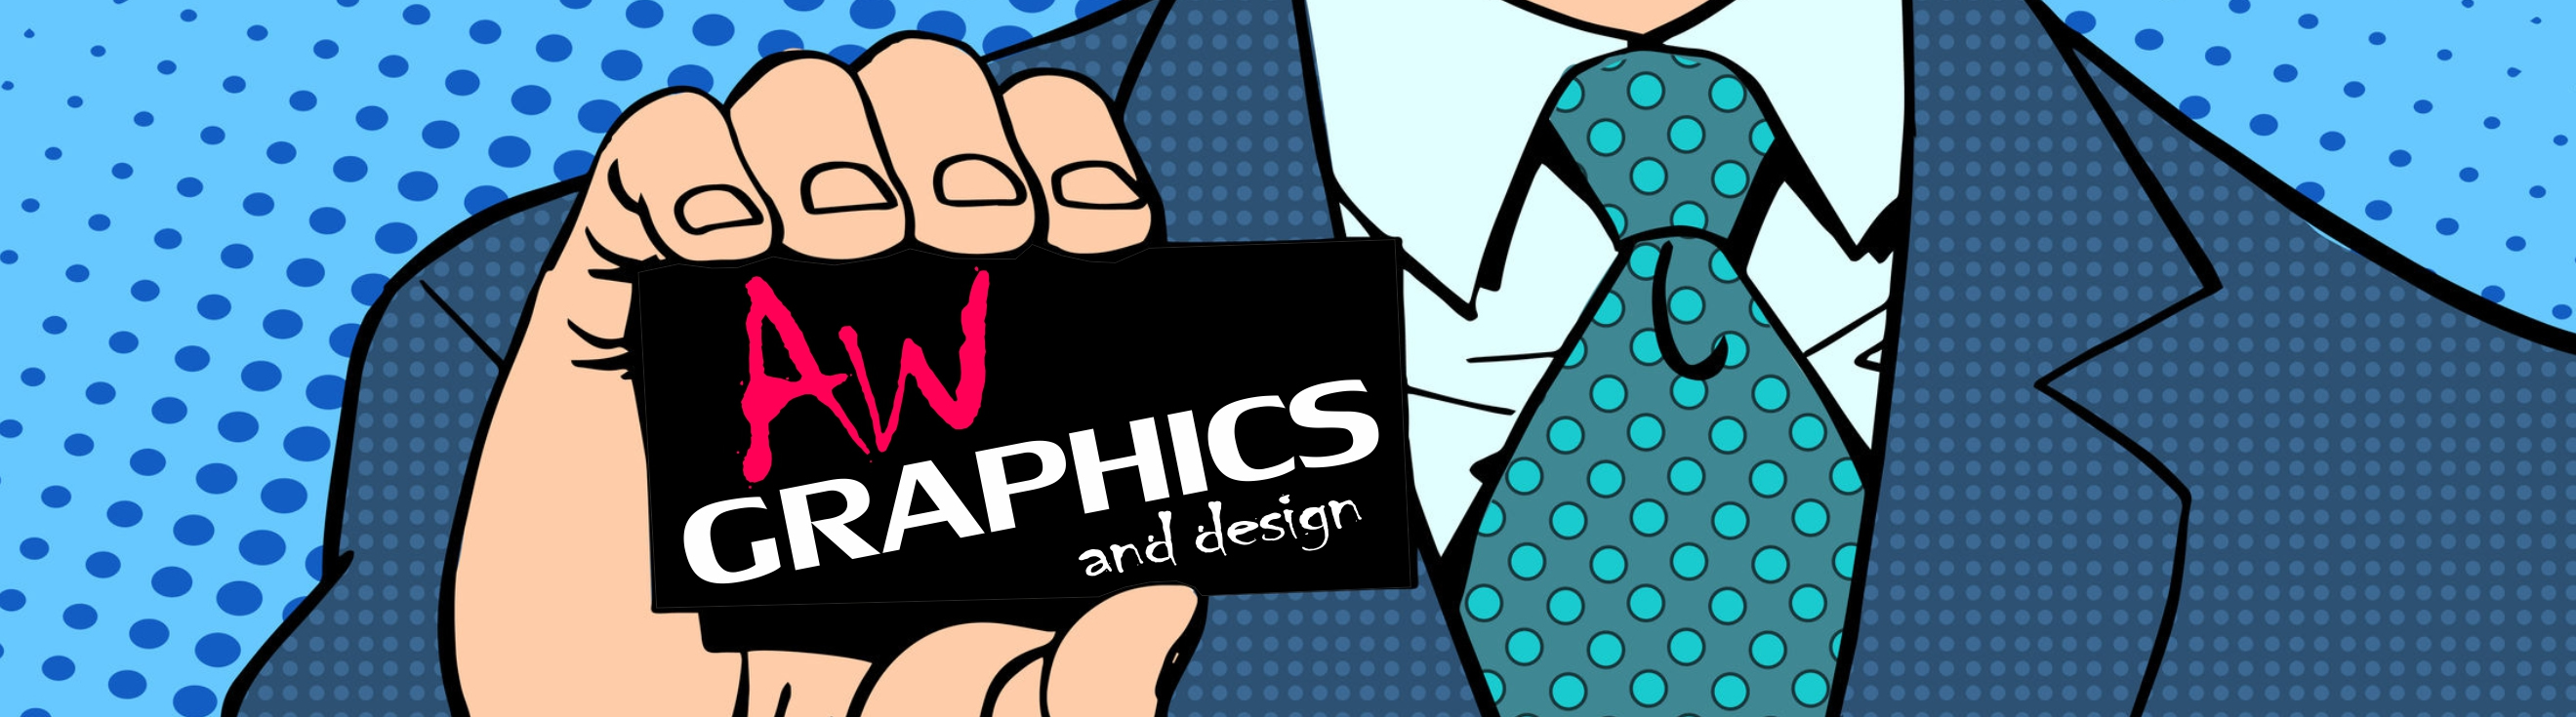 AW Graphics & Design | Website Design & Graphic Design in Gower, Swansea